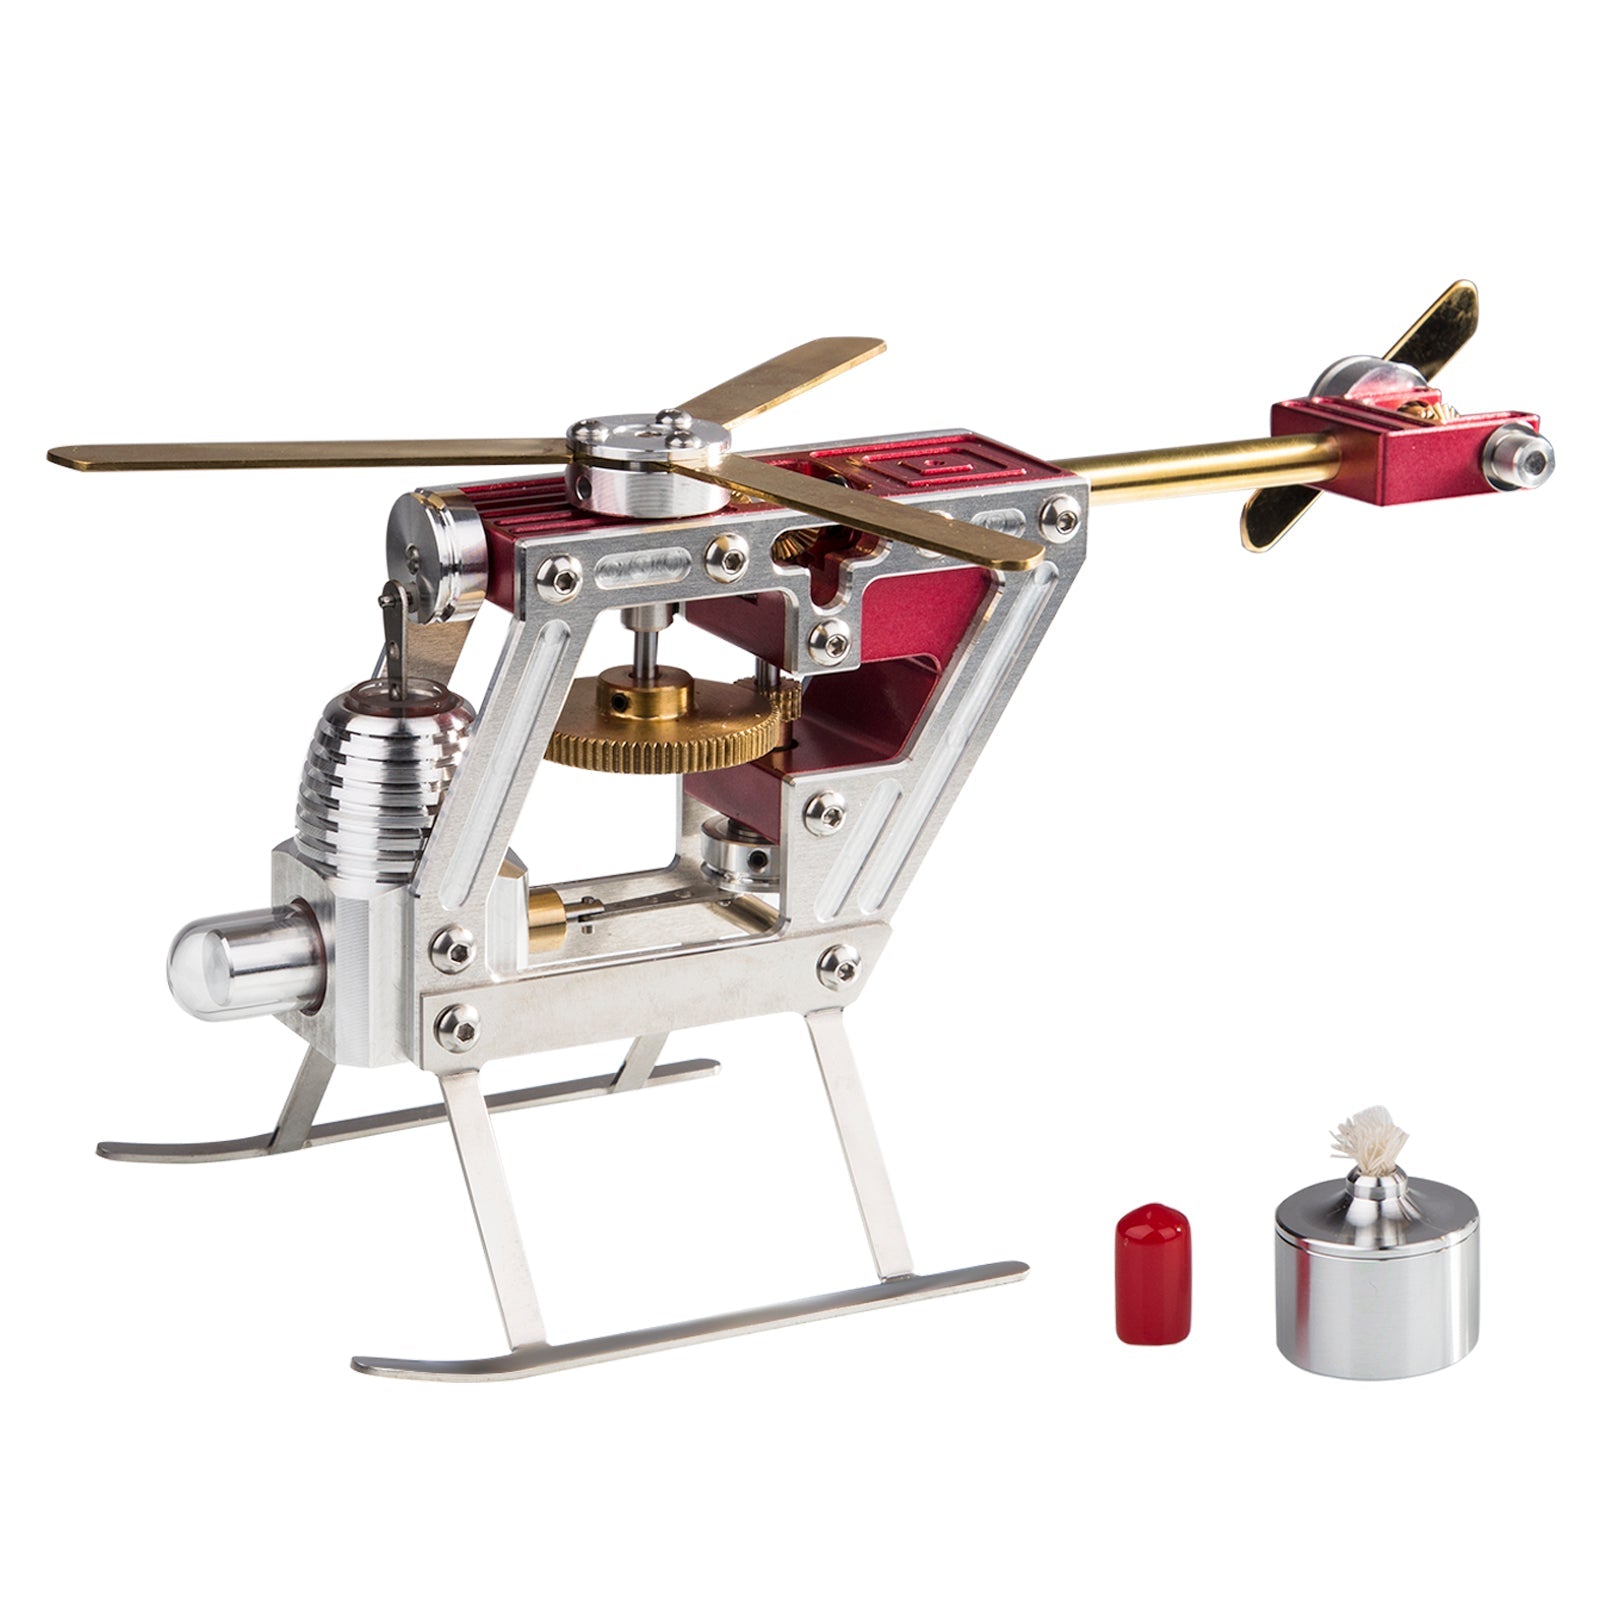 ENJOMOR Metal Stirling Helicopter Engine Model Kits γ-shape Hot-air Stirling Engine STEAM Science Education Toy